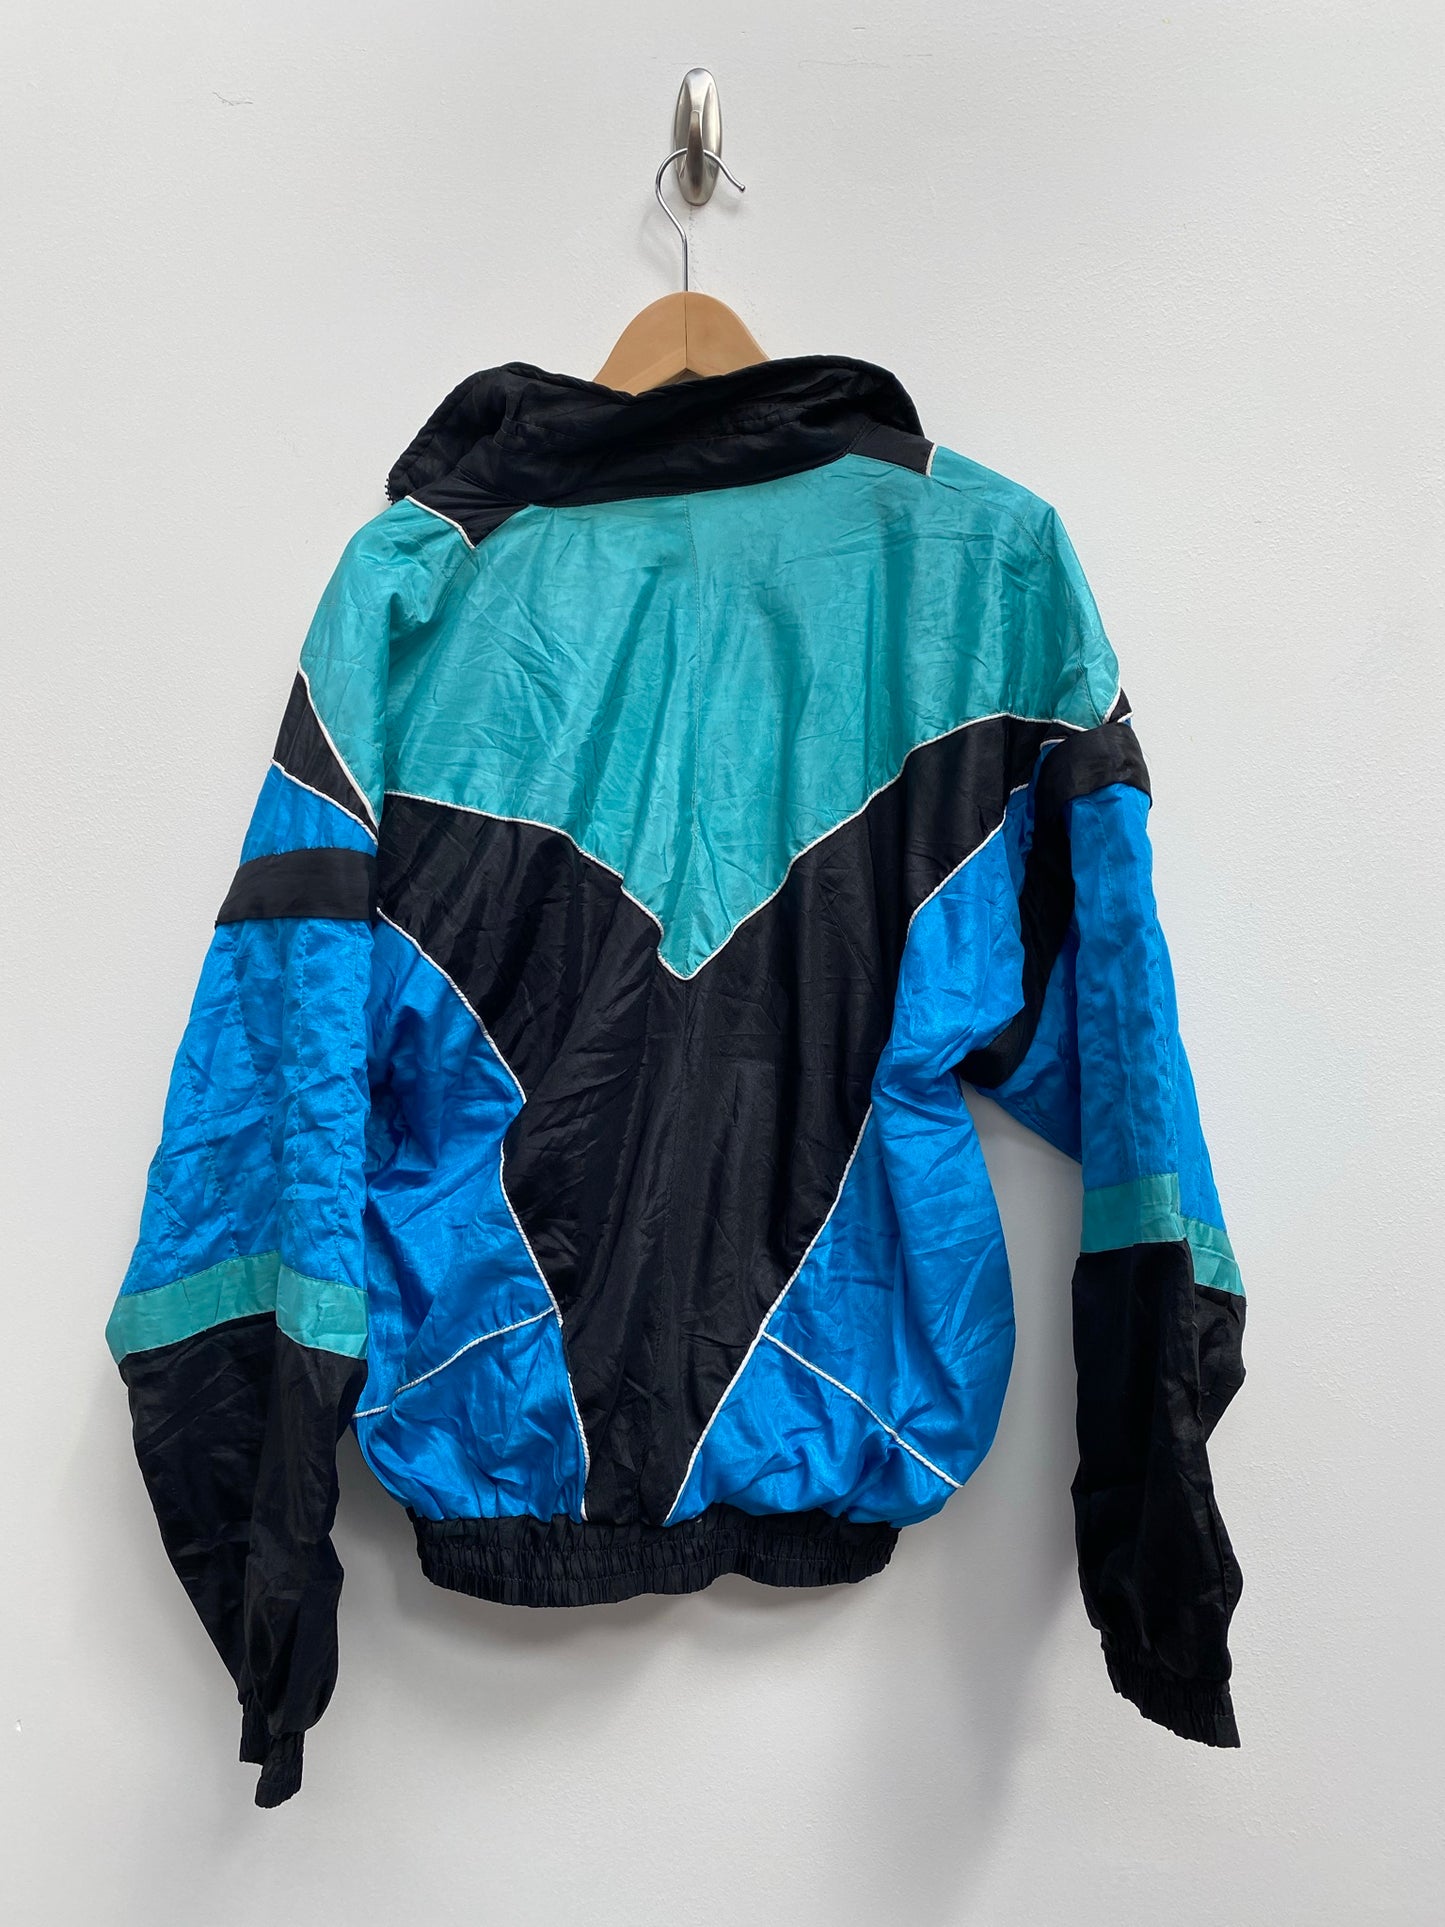 Vintage 80s Blue, Black Shell Jacket Size Medium - festival wear